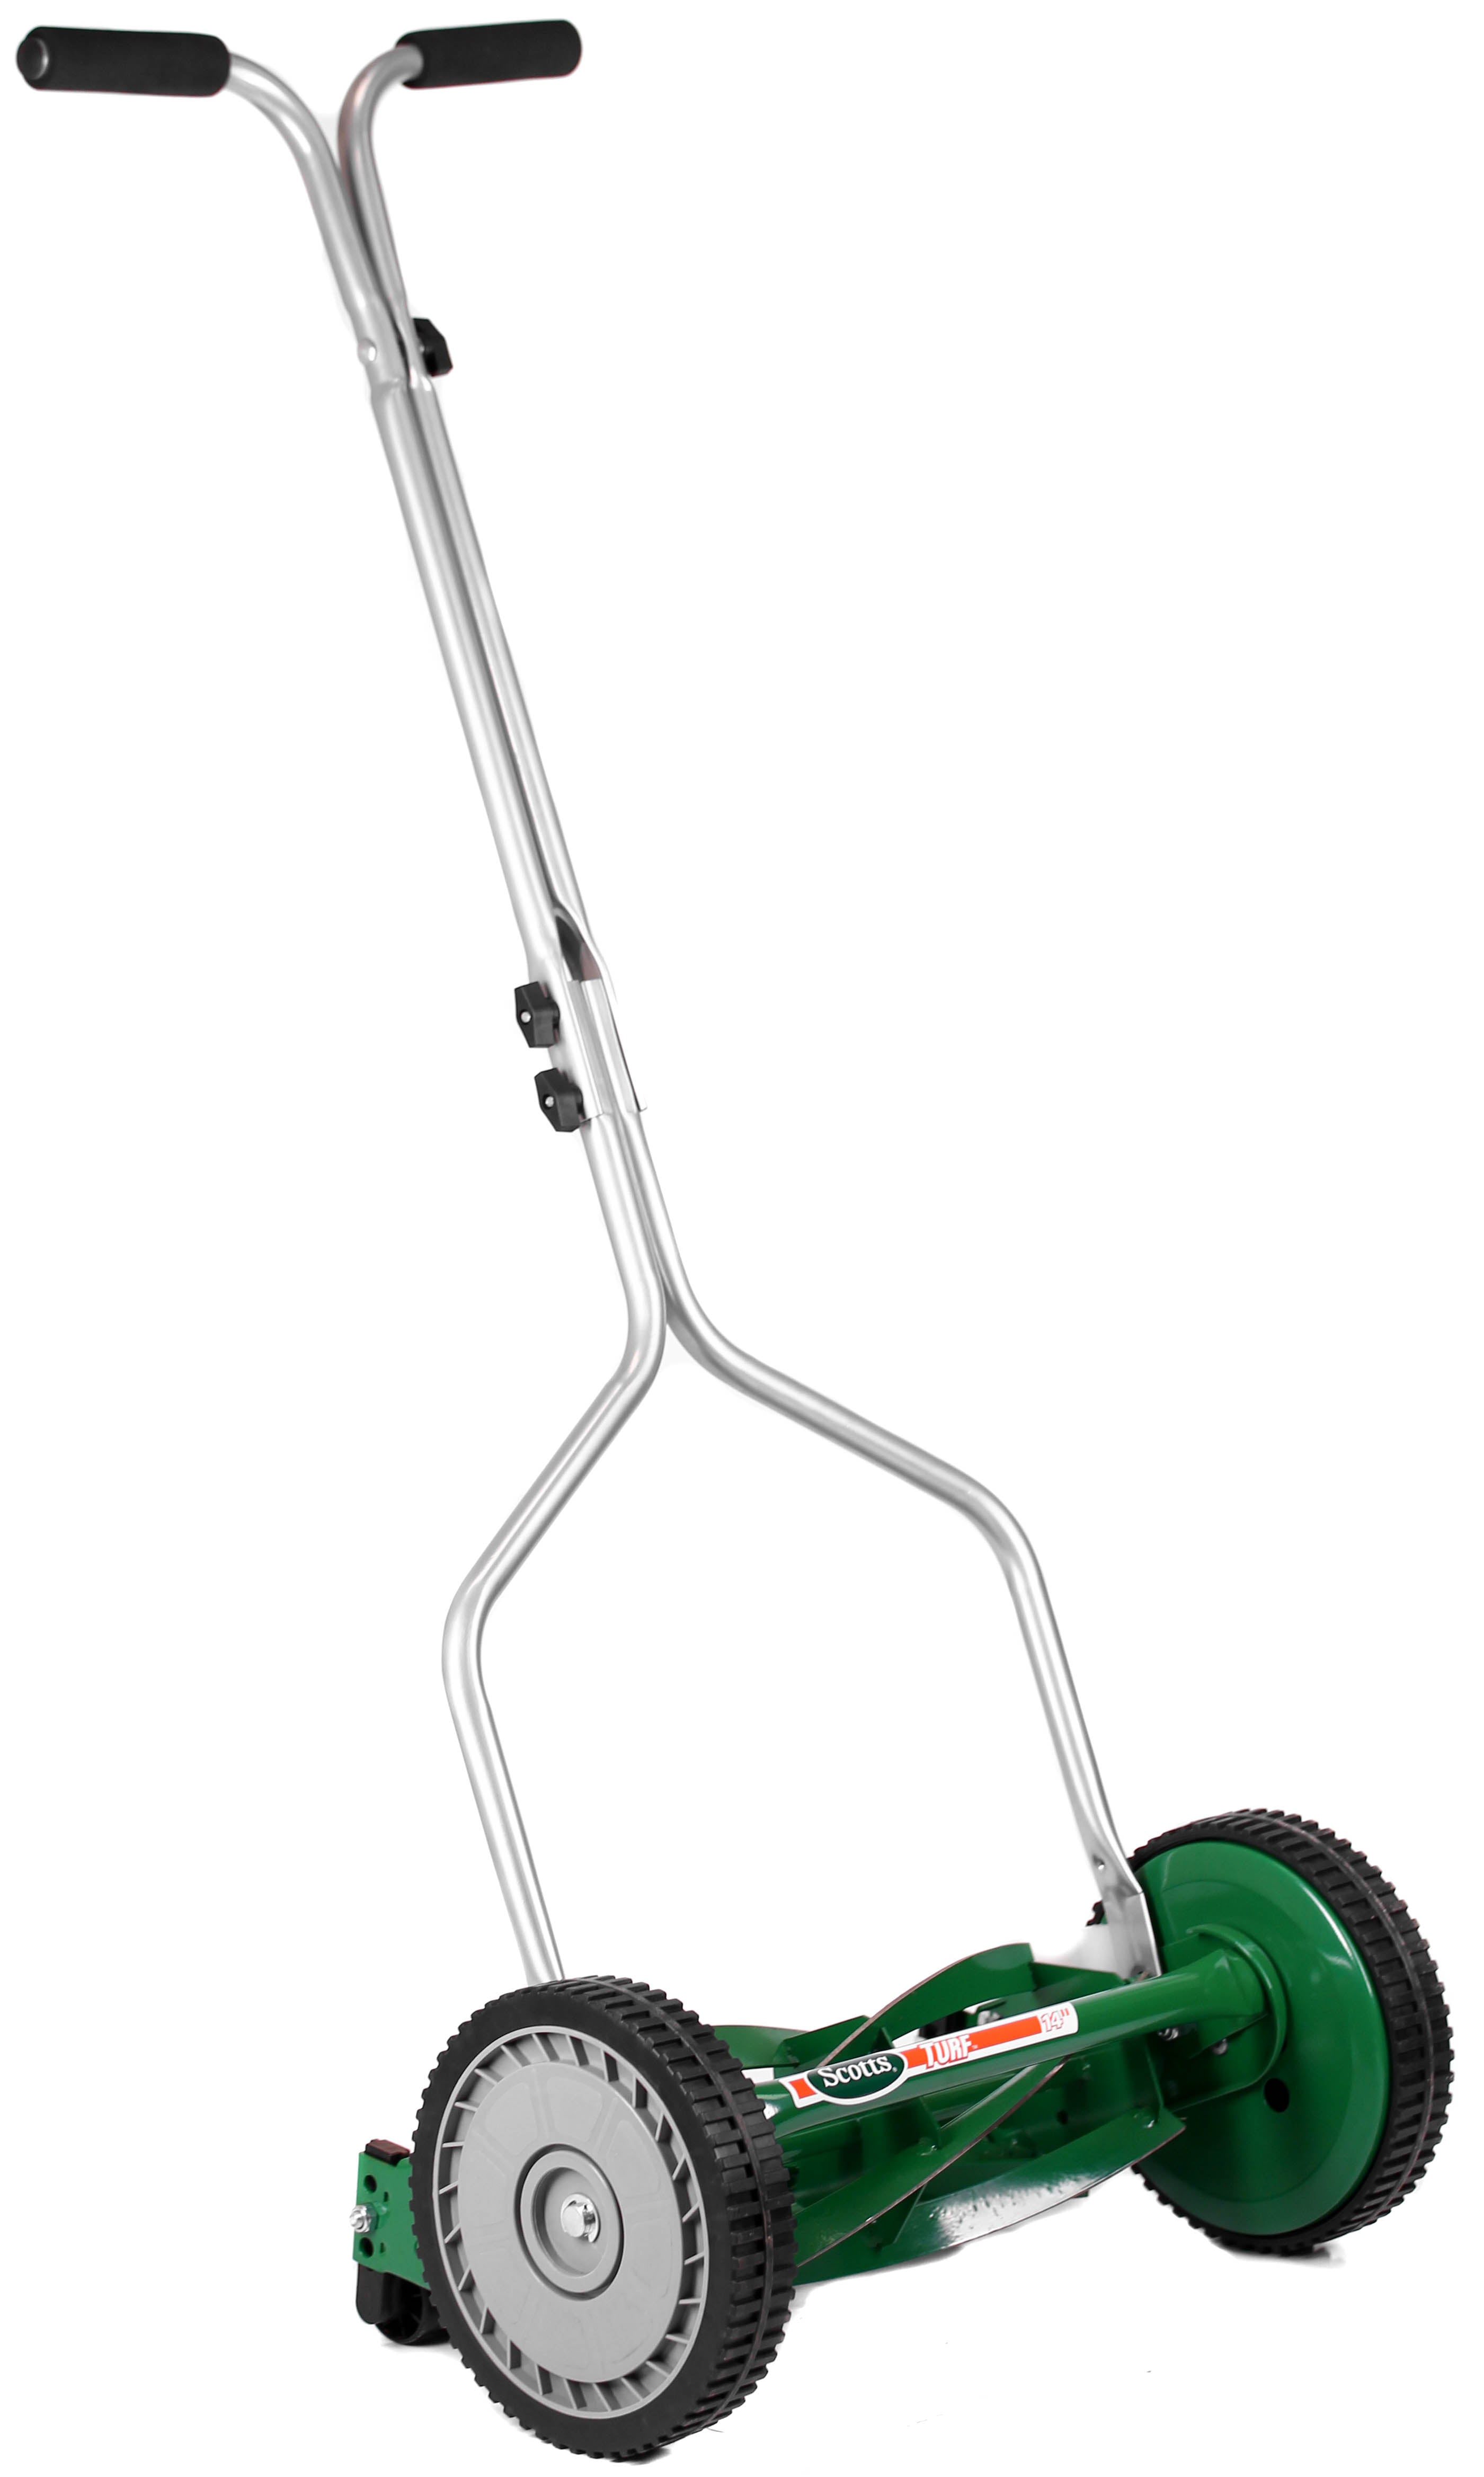 Scotts 14 Manual Reel Mower – American Lawn Mower Co. EST 1895